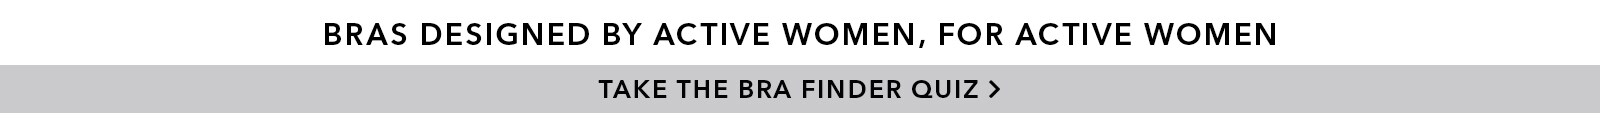 Bras designed by active women, for active women. Take the Bra Finder Quiz.